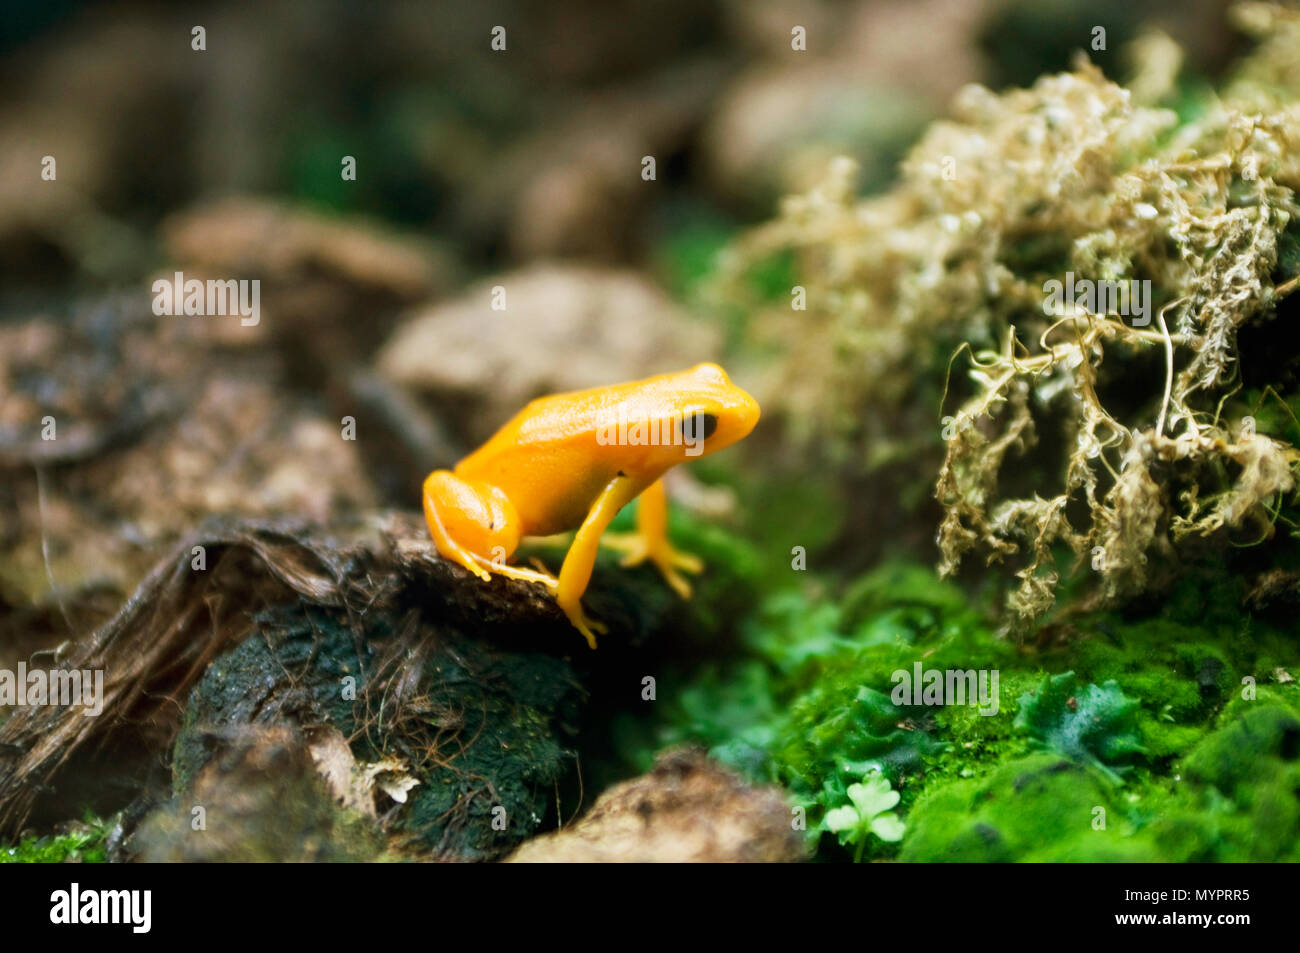 Poison yellow frog — Stock Image & Photo Stock Photo